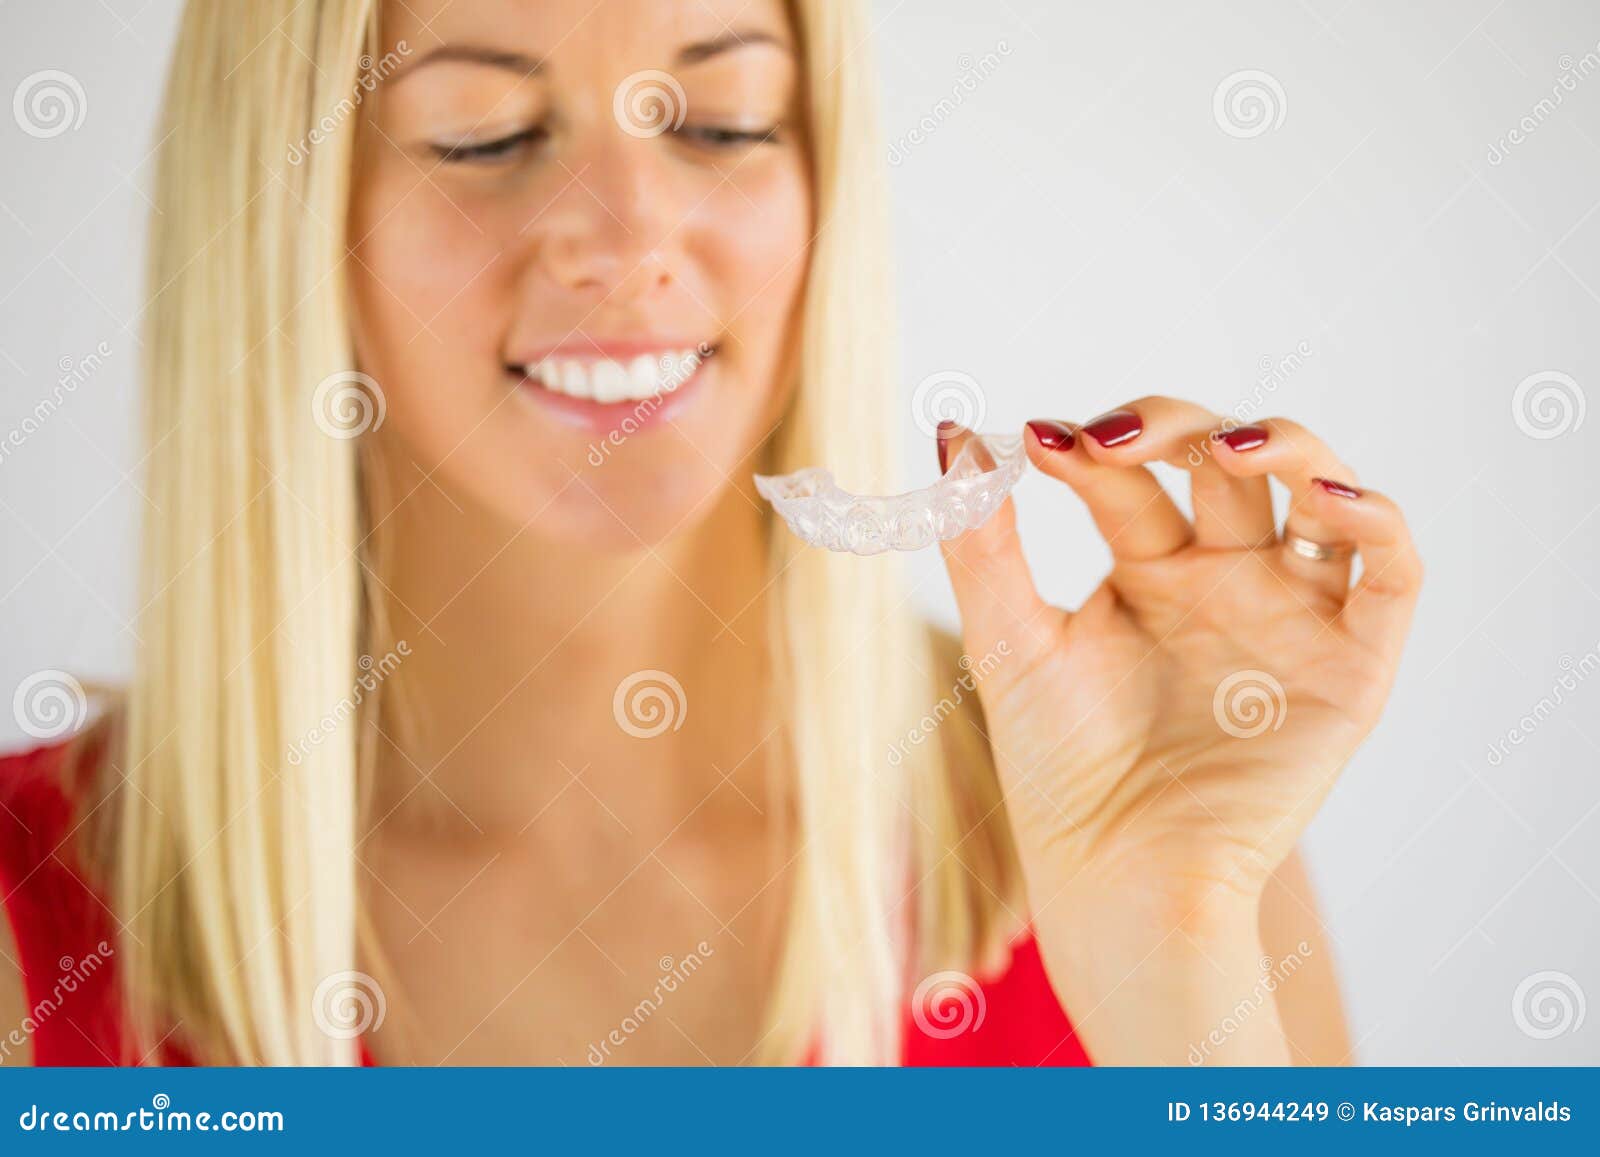 woman using teeth whitening braces